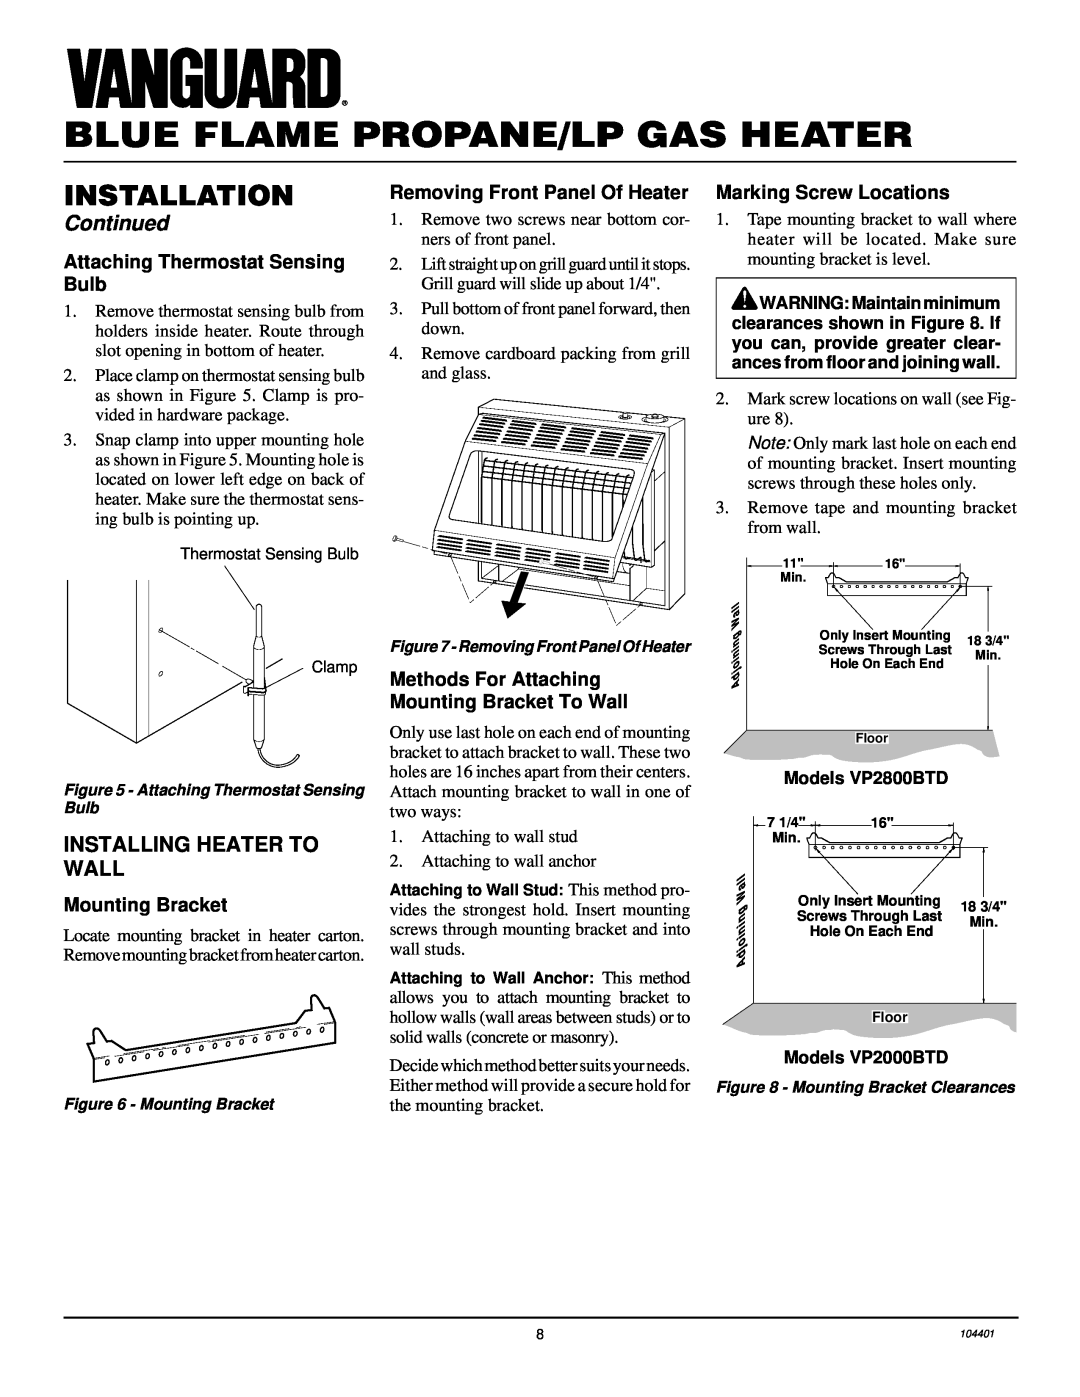 Vanguard Heating VP2800BTD Installing Heater To Wall, Attaching Thermostat Sensing Bulb, Mounting Bracket, Installation 